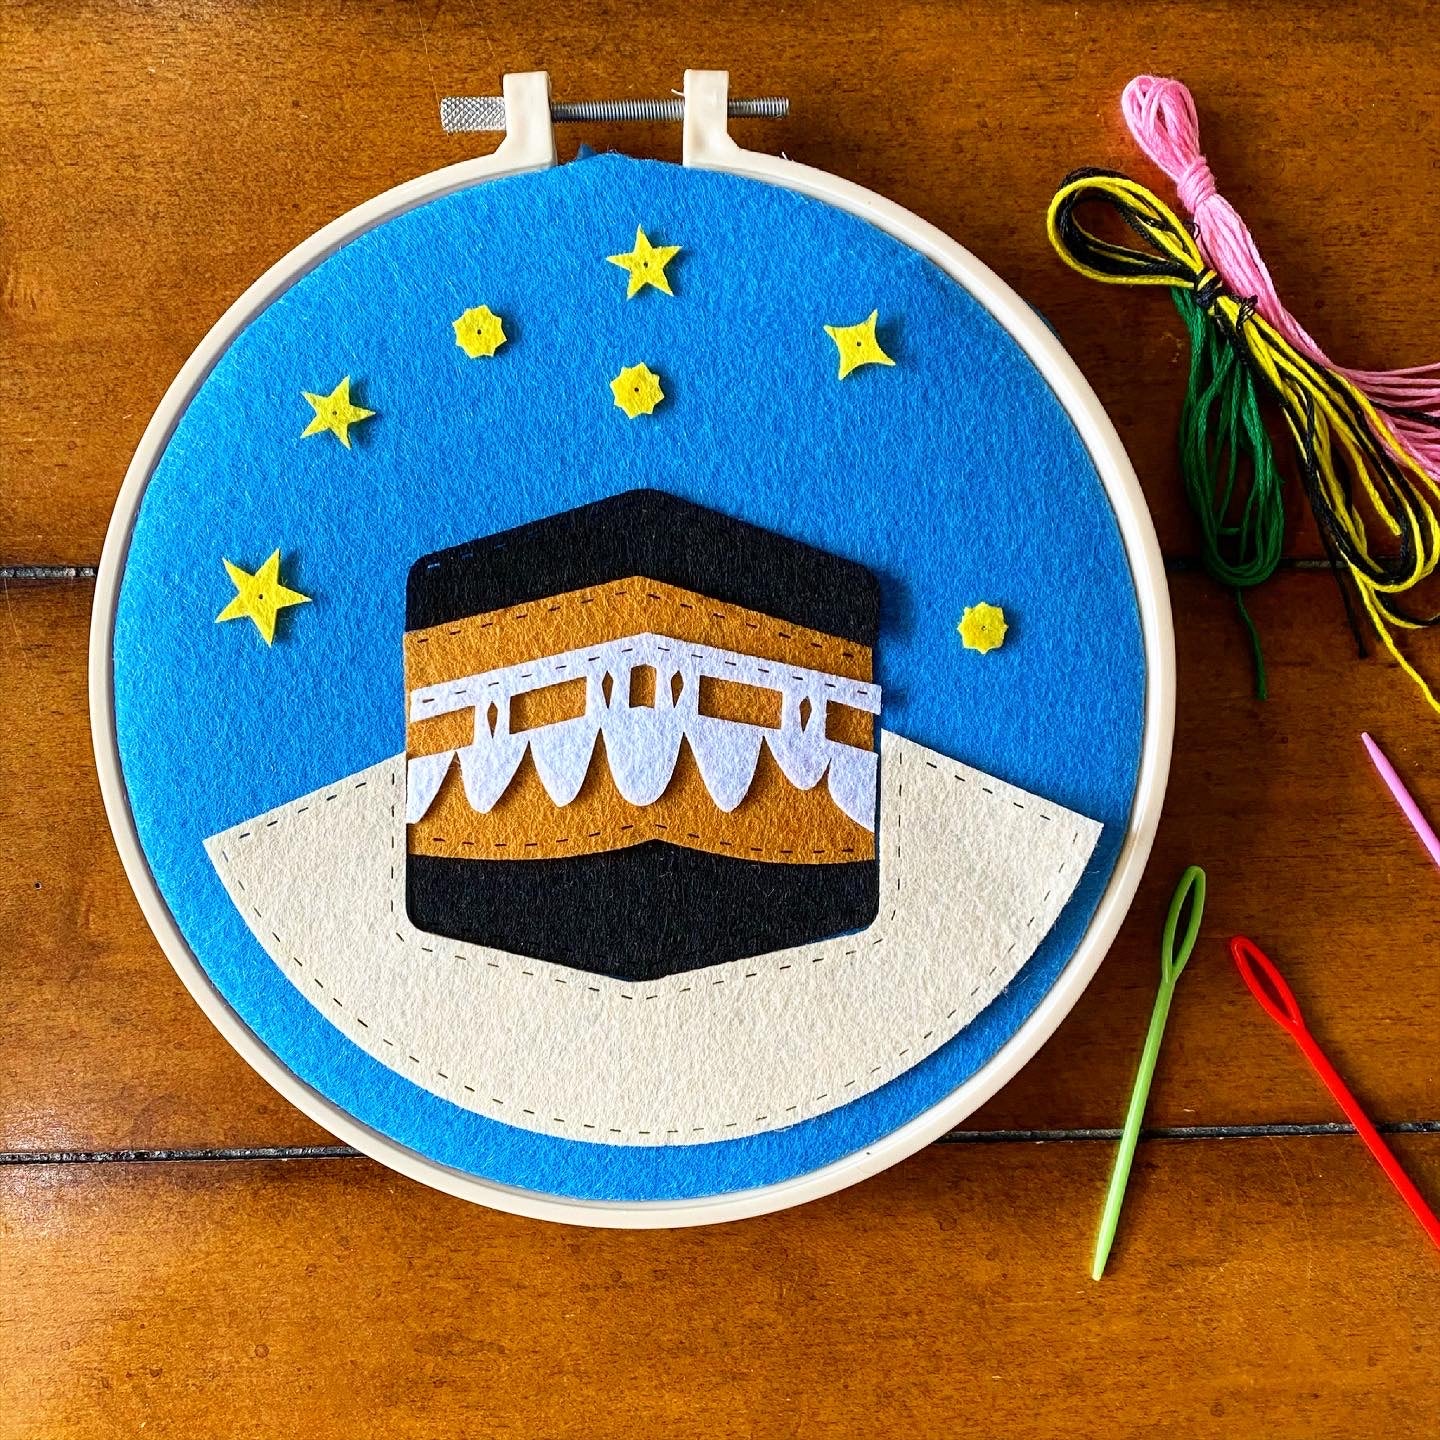 Islamic Embroidery Kits